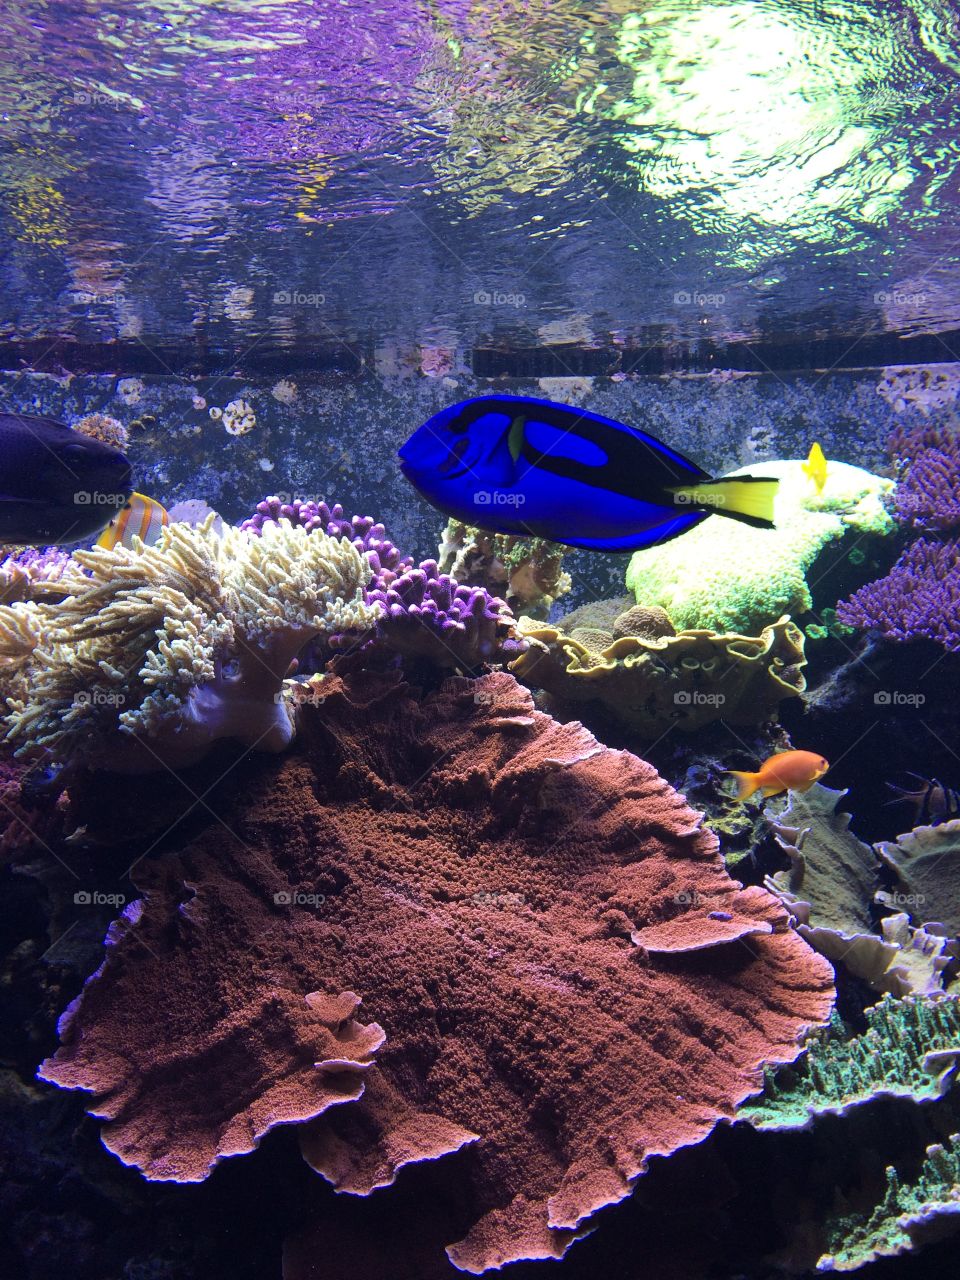 Finding Dori in a fish tank!